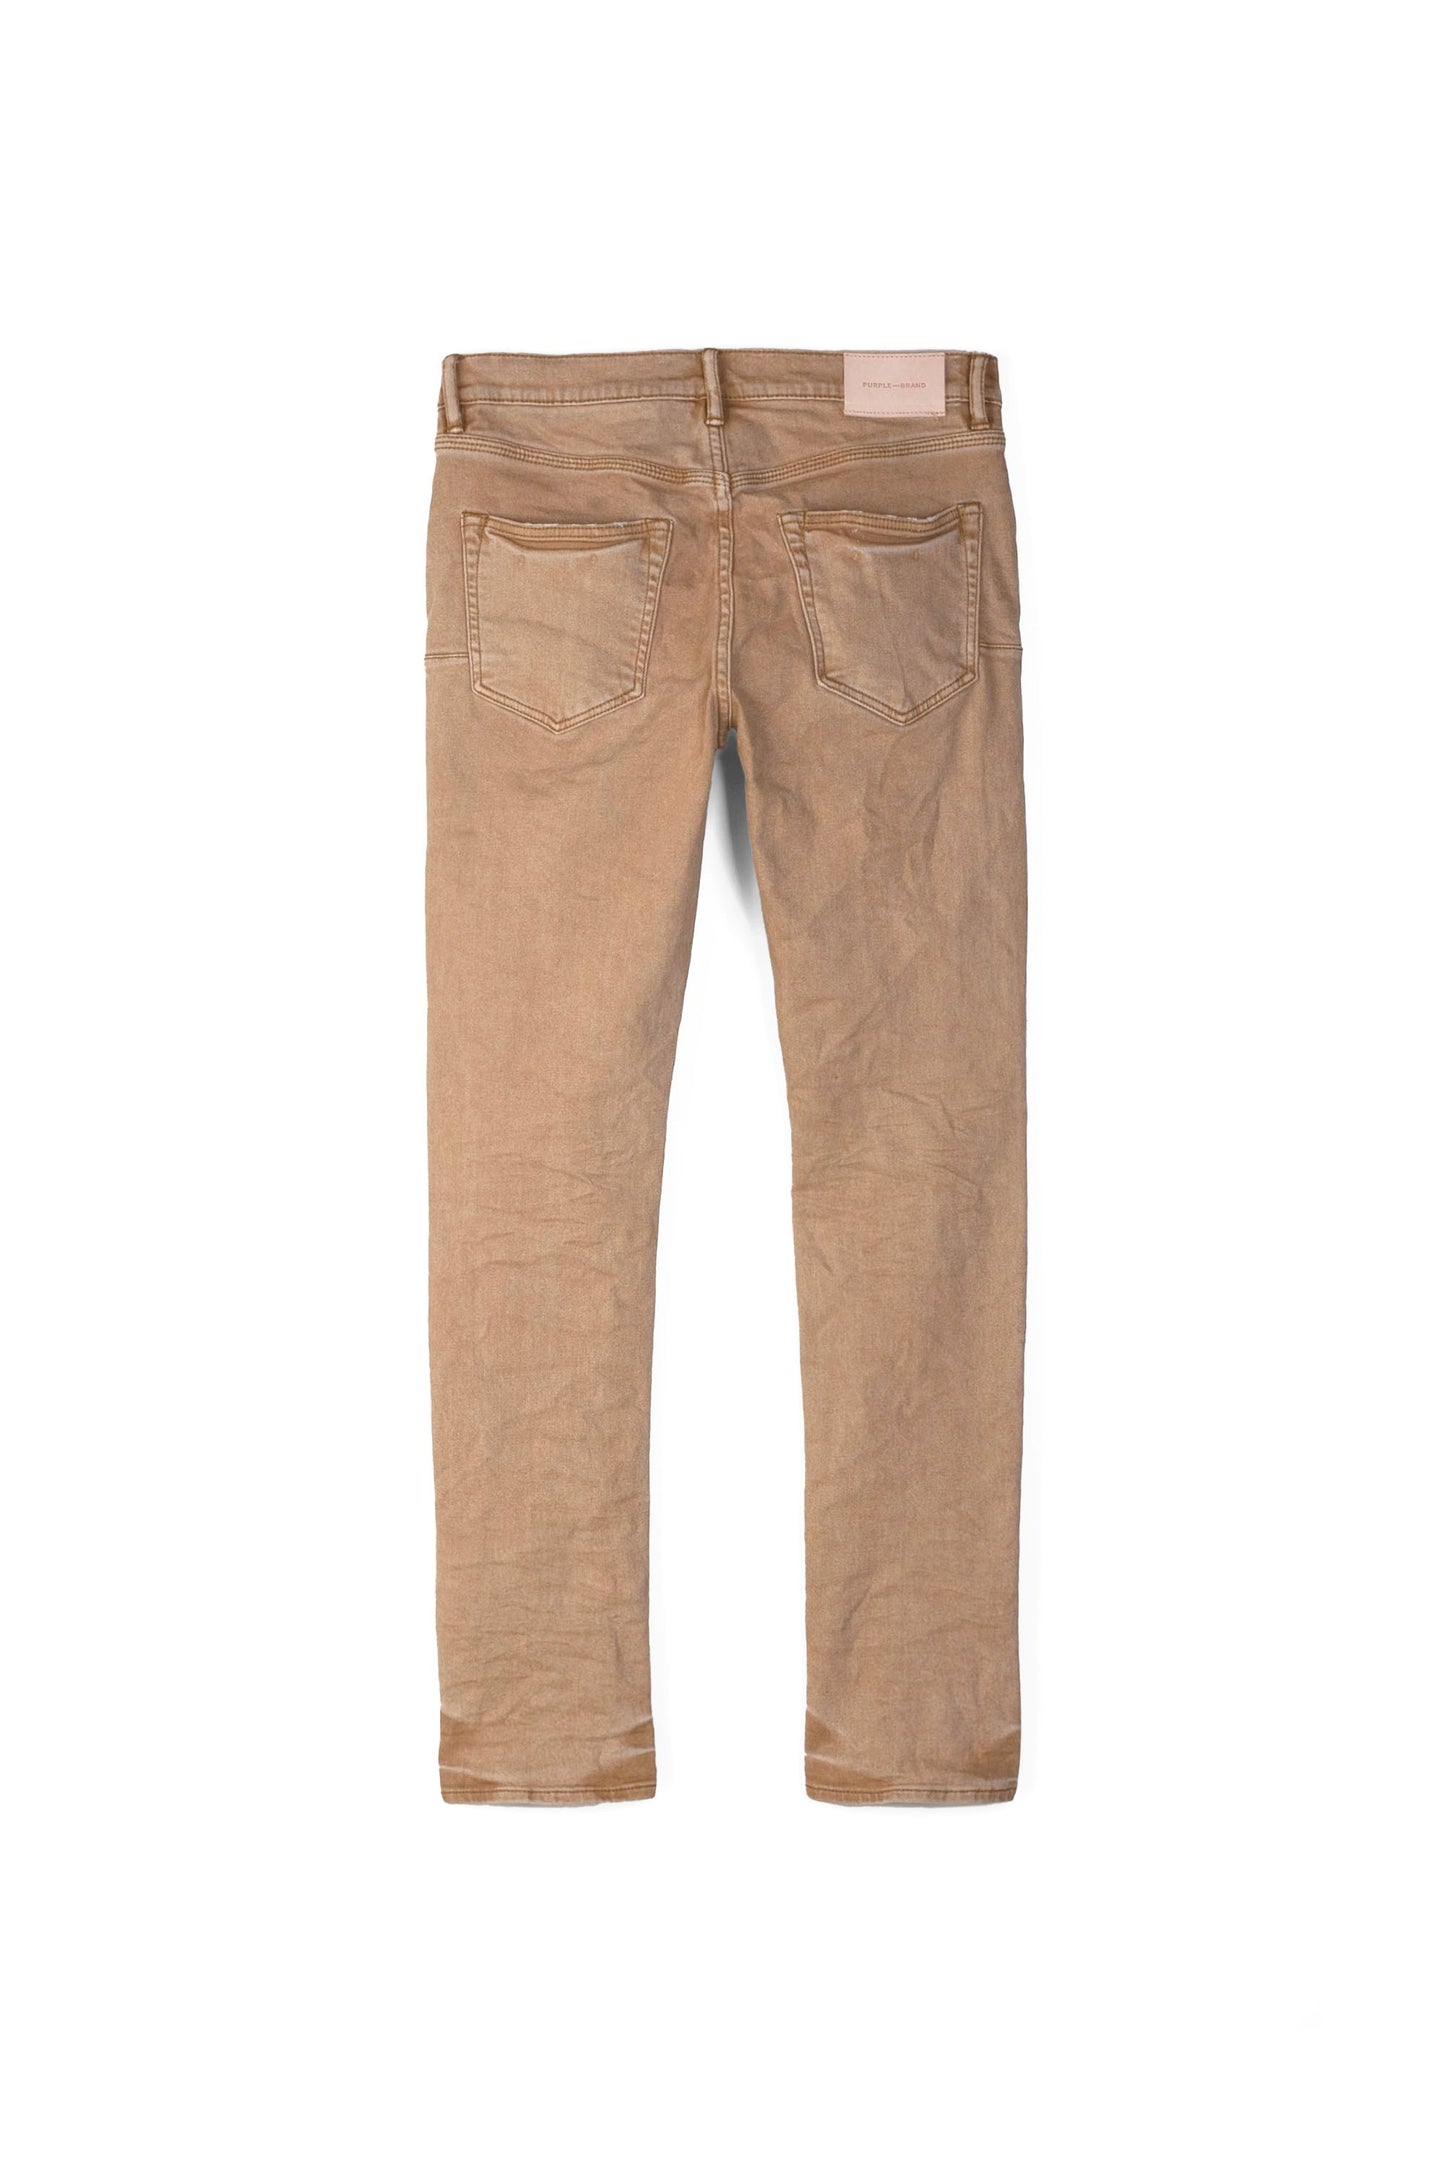 PURPLE BRAND - Men's Denim Jean - Low Rise Skinny - Style No. P001 - Sandstone Vintage Wash - Back